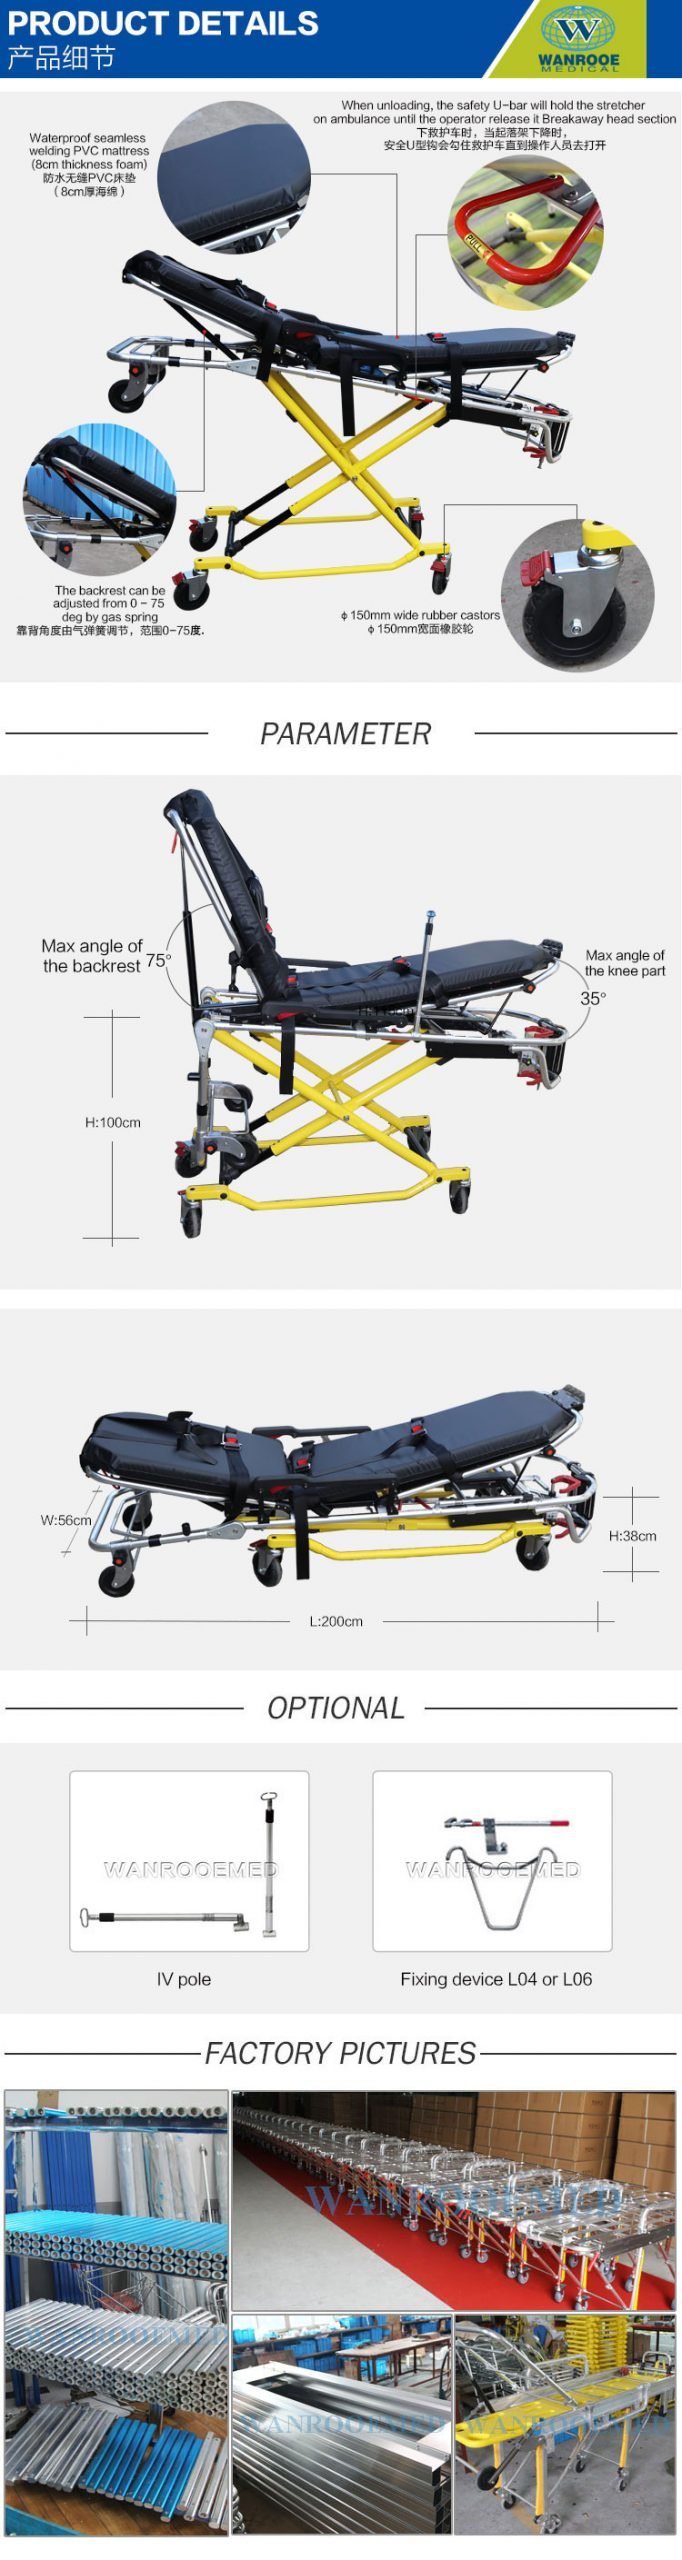 emergency folding rescue stretcher,ambulance cot,emergency stretcher,manual stretcher,x frame stretcher